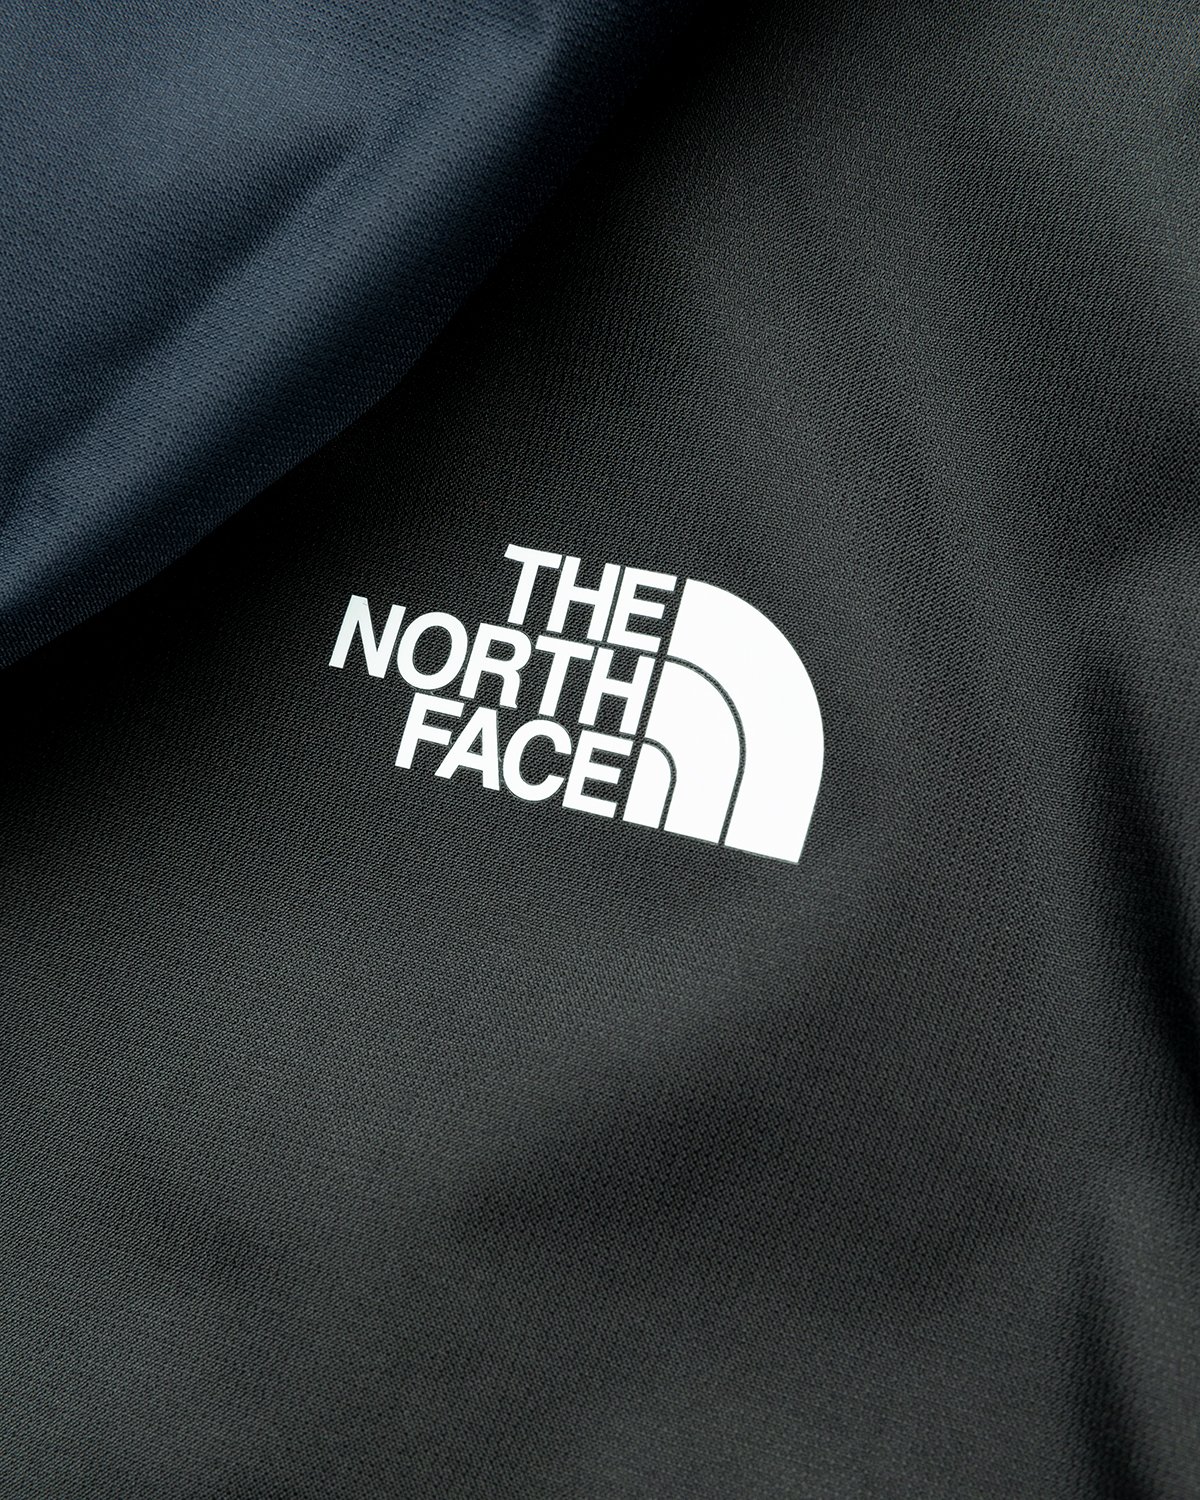 The North Face - Farside Jacket Aviator Navy - Clothing - Blue - Image 6